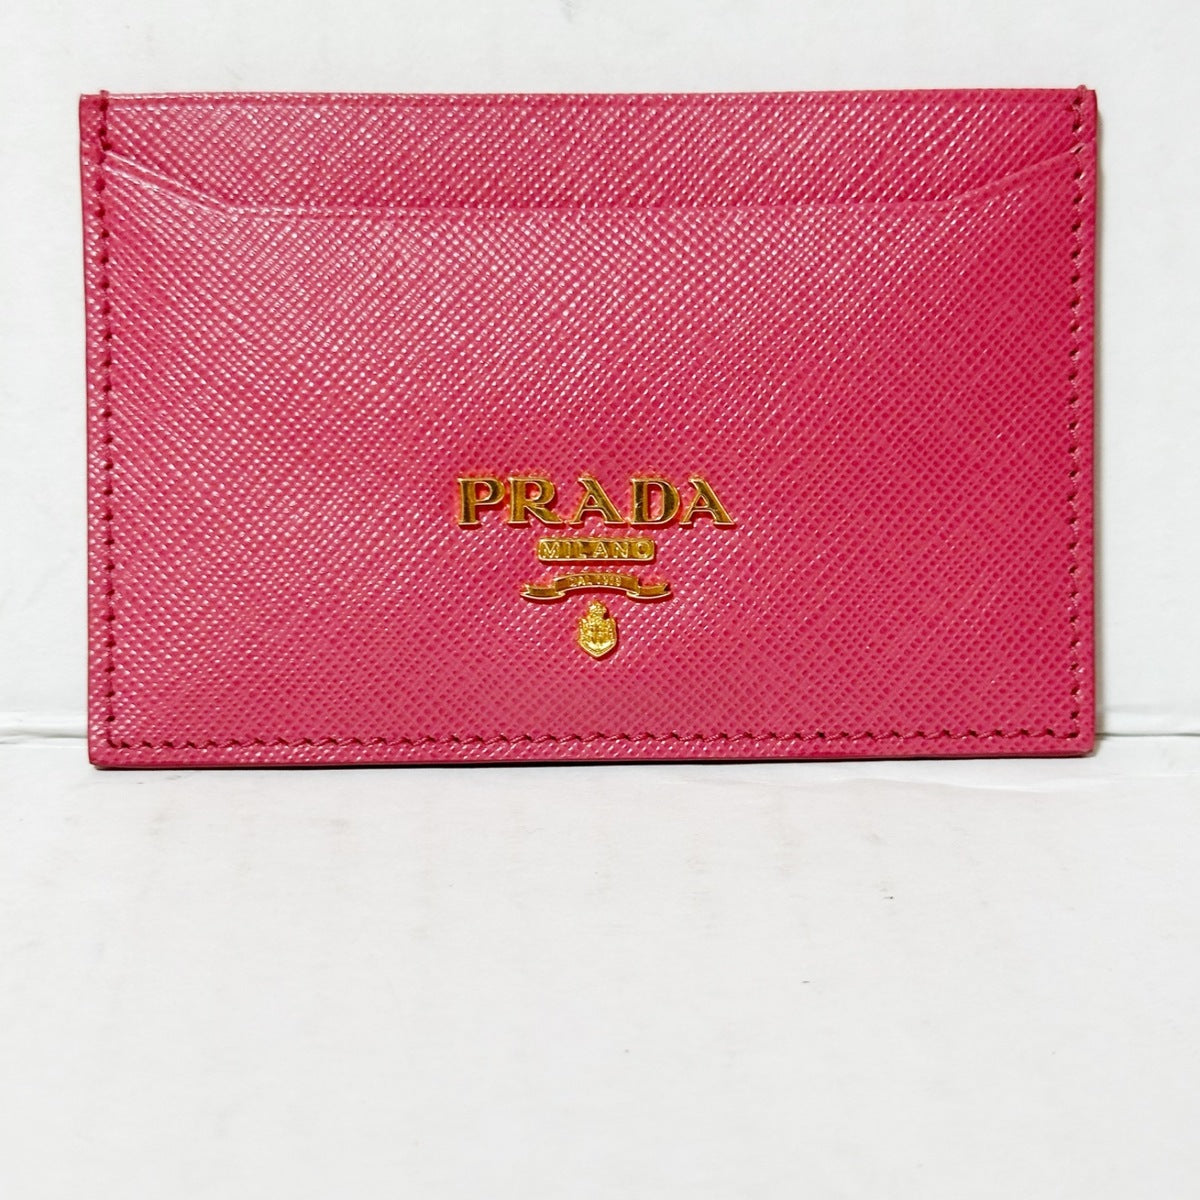 PRADA - Card Case Pink Leather